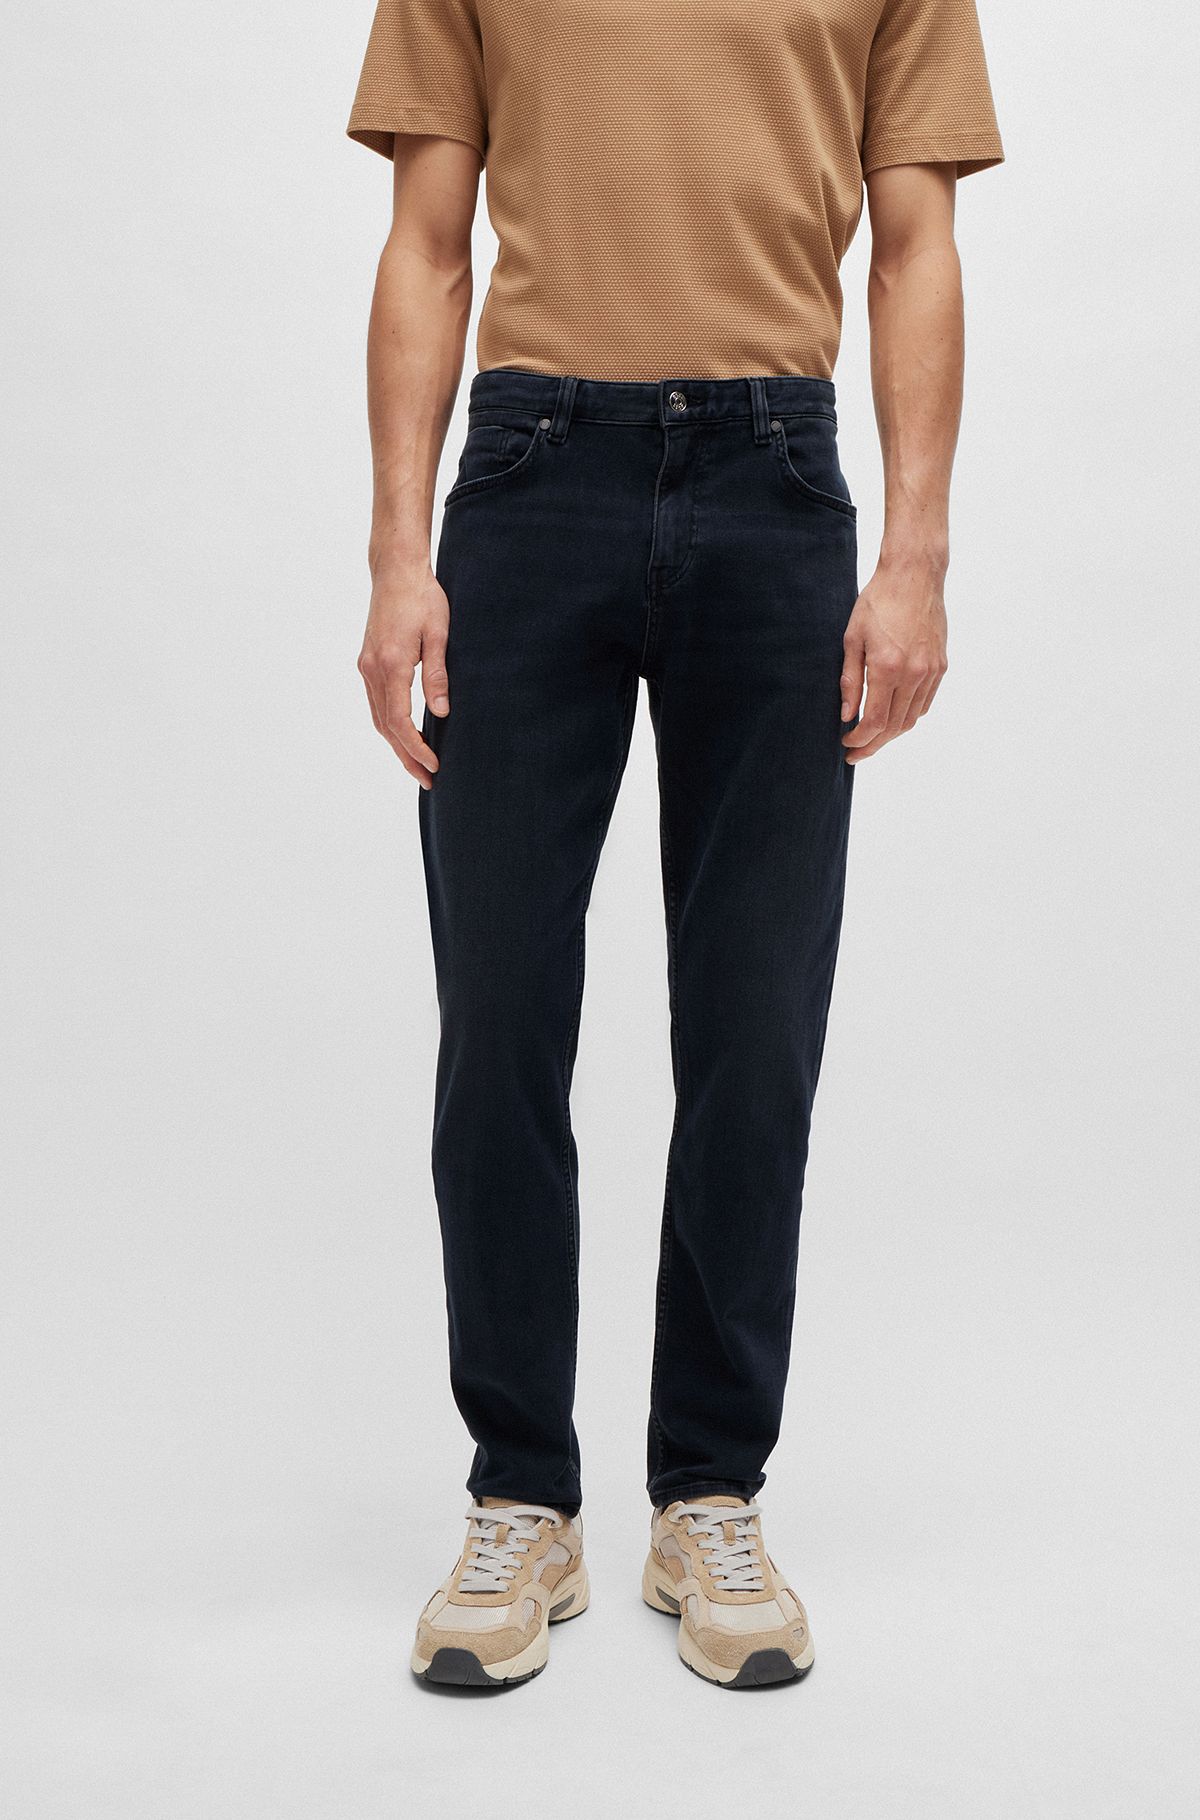 Maine Regular-fit jeans in coal-navy Italian denim, Dark Blue